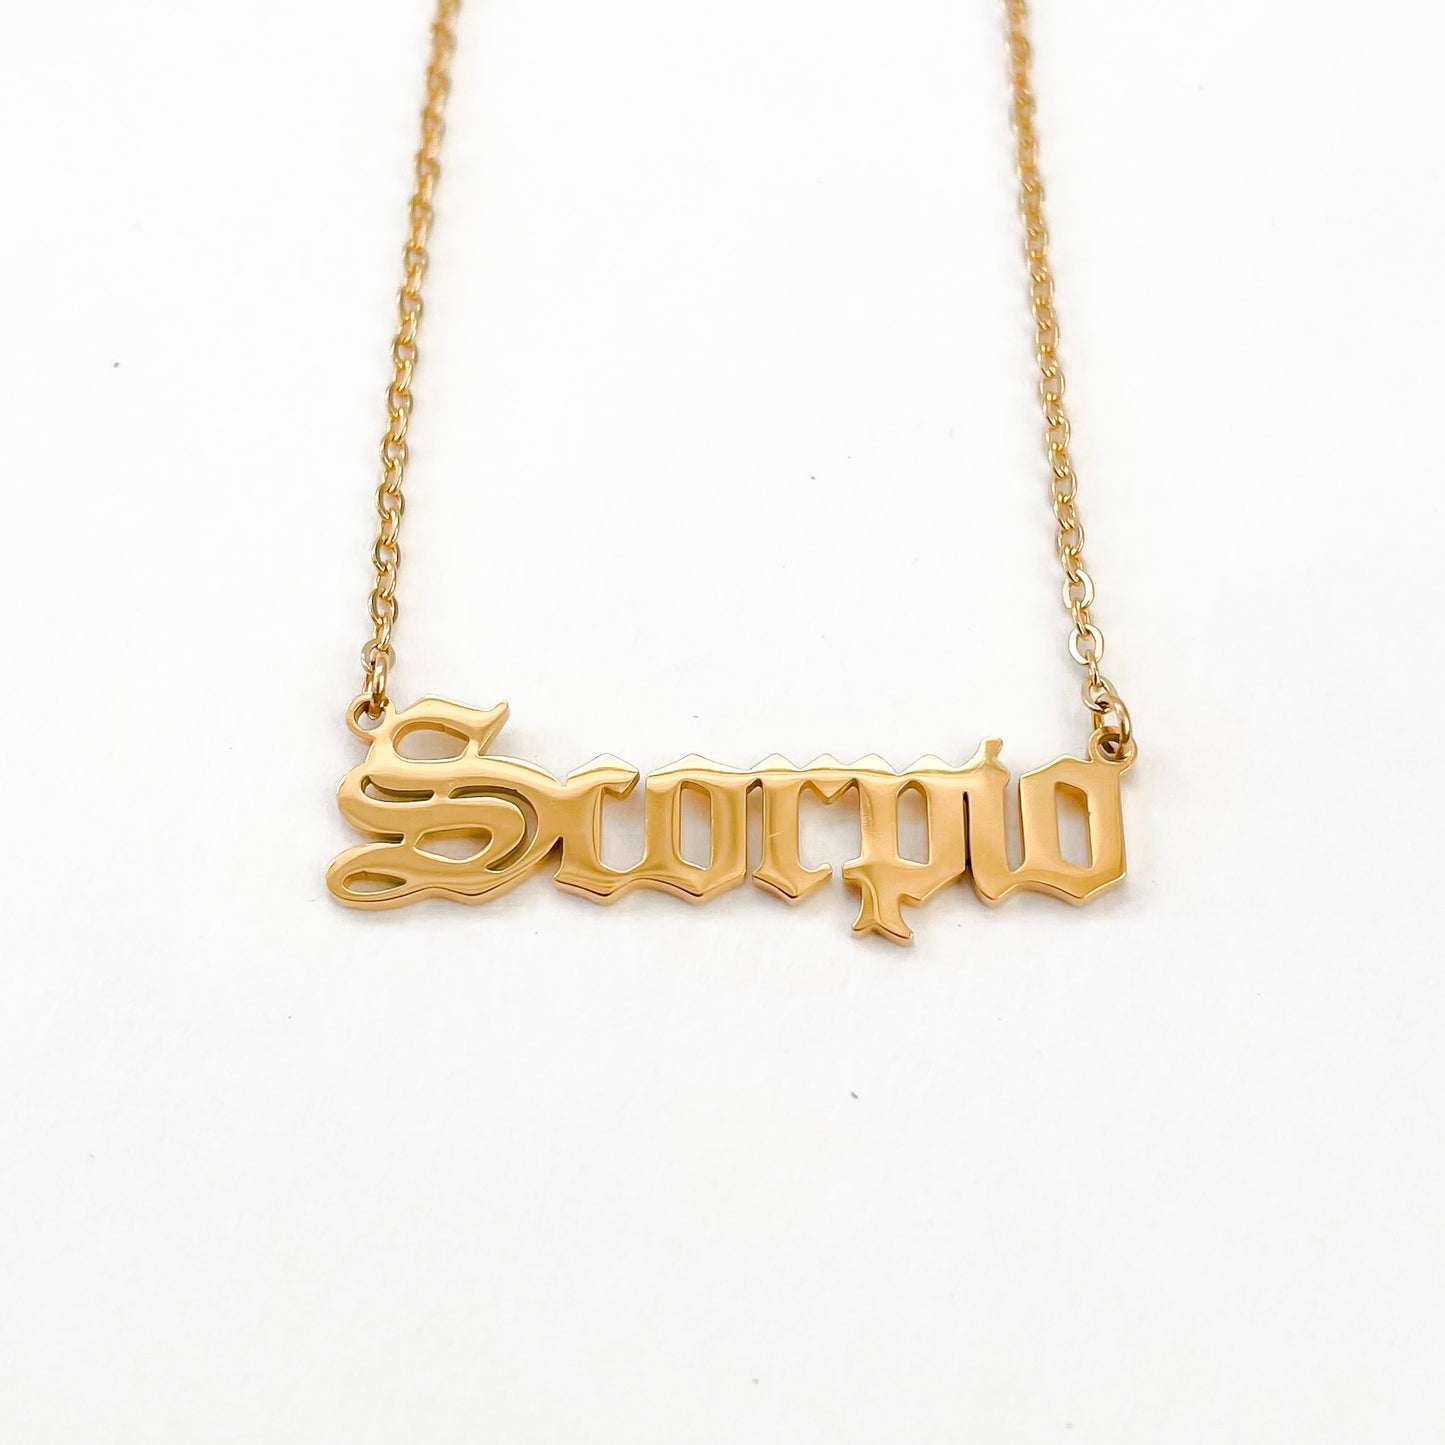 Scorpio Necklace in Gold